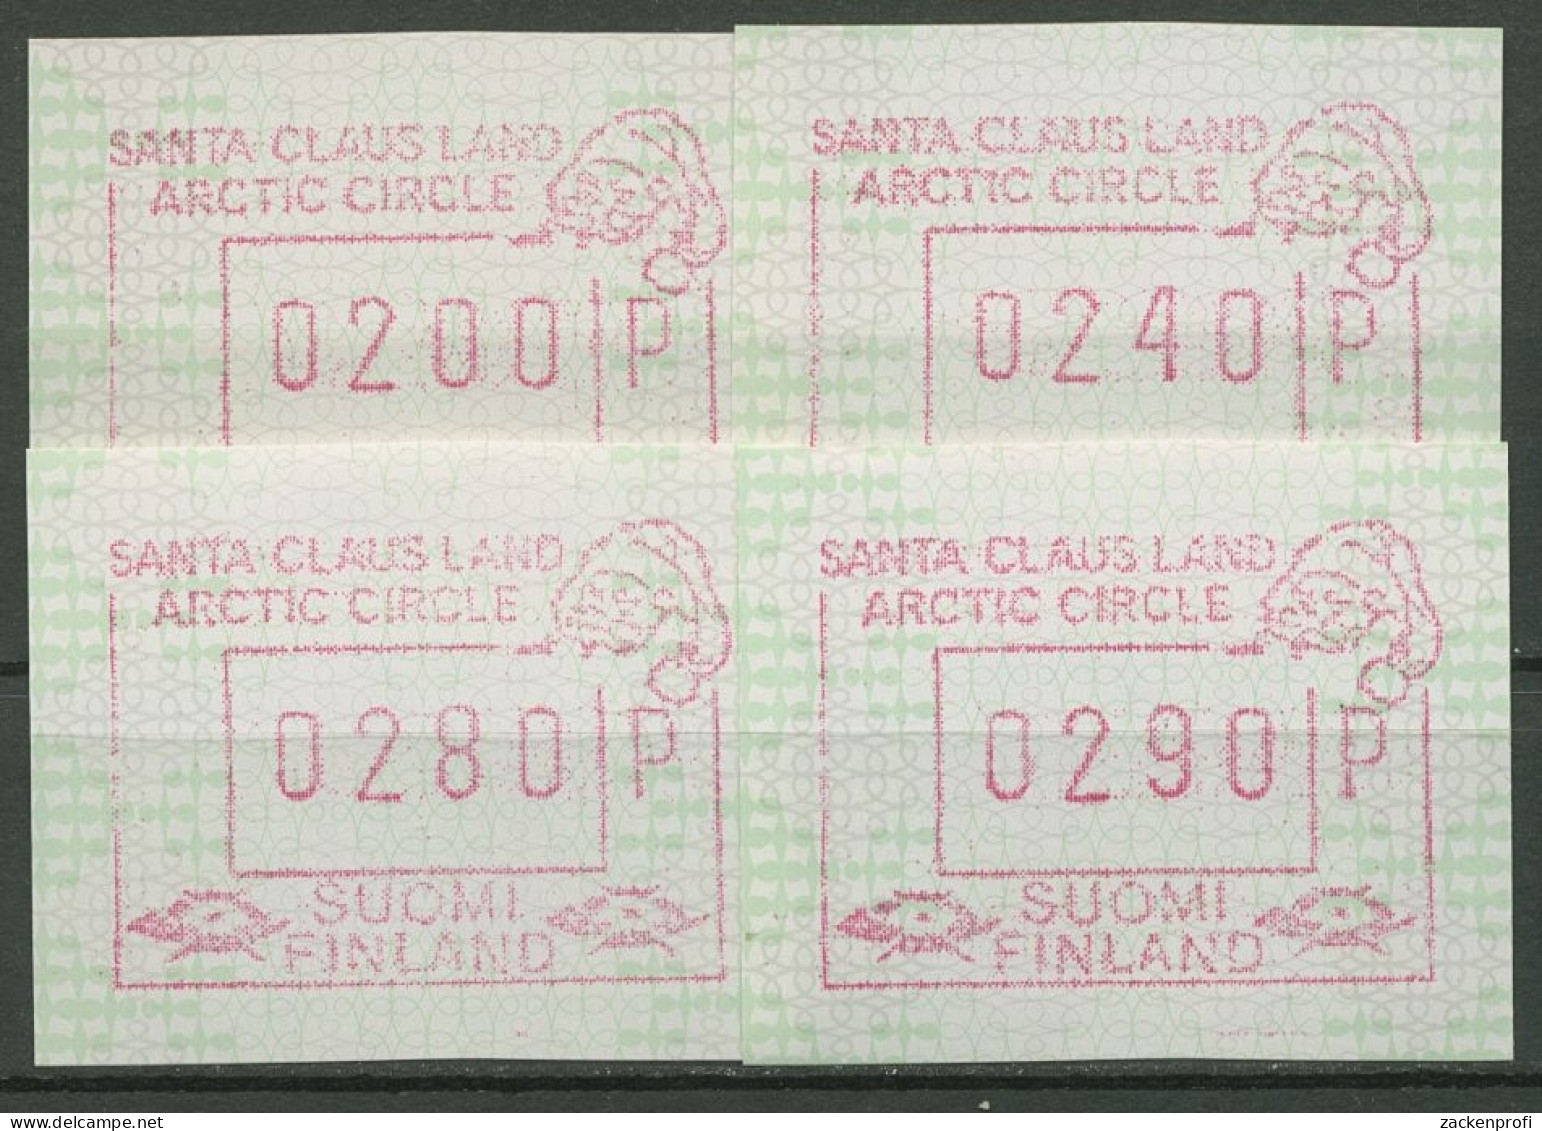 Finnland ATM 1994 SANTA CLAUS LAND ARCTIC CIRCLE Satz ATM 19.1 S 2 Postfrisch - Viñetas De Franqueo [ATM]